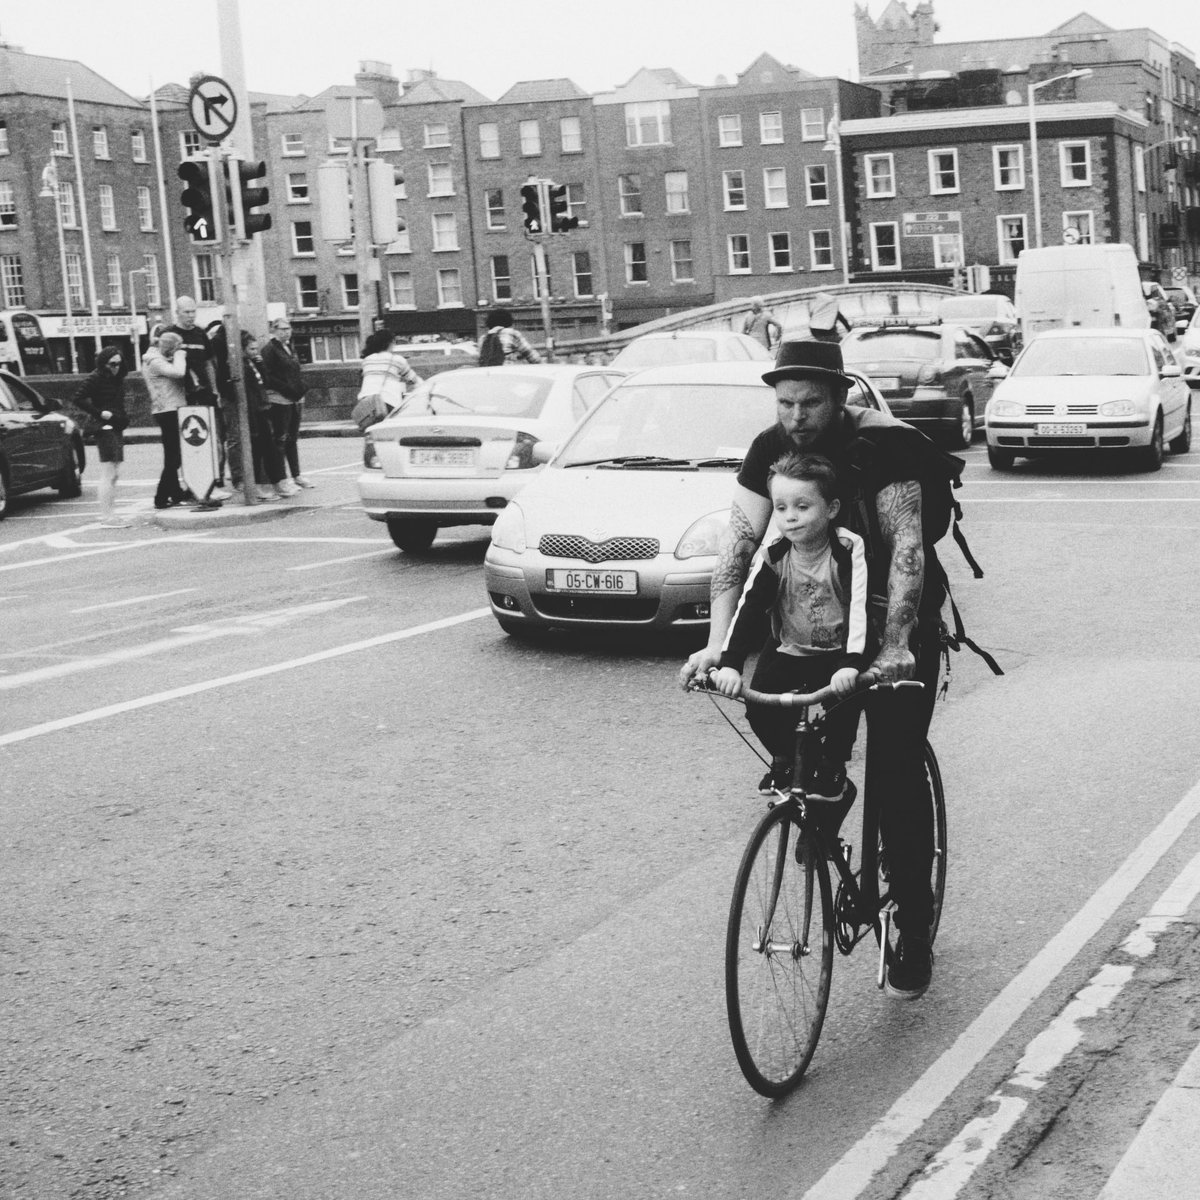 #dublin #life_is_street #photooftheday #streetphotography #bicycle #spicollective #cyclist #kid #boy #smile #tattooed #bnw #bnwphotography #zwartwitfotografie #straatfotografie #noiretblanc #schwarzweißfotografie #ireland #friendsinstreets #friendsinbnw